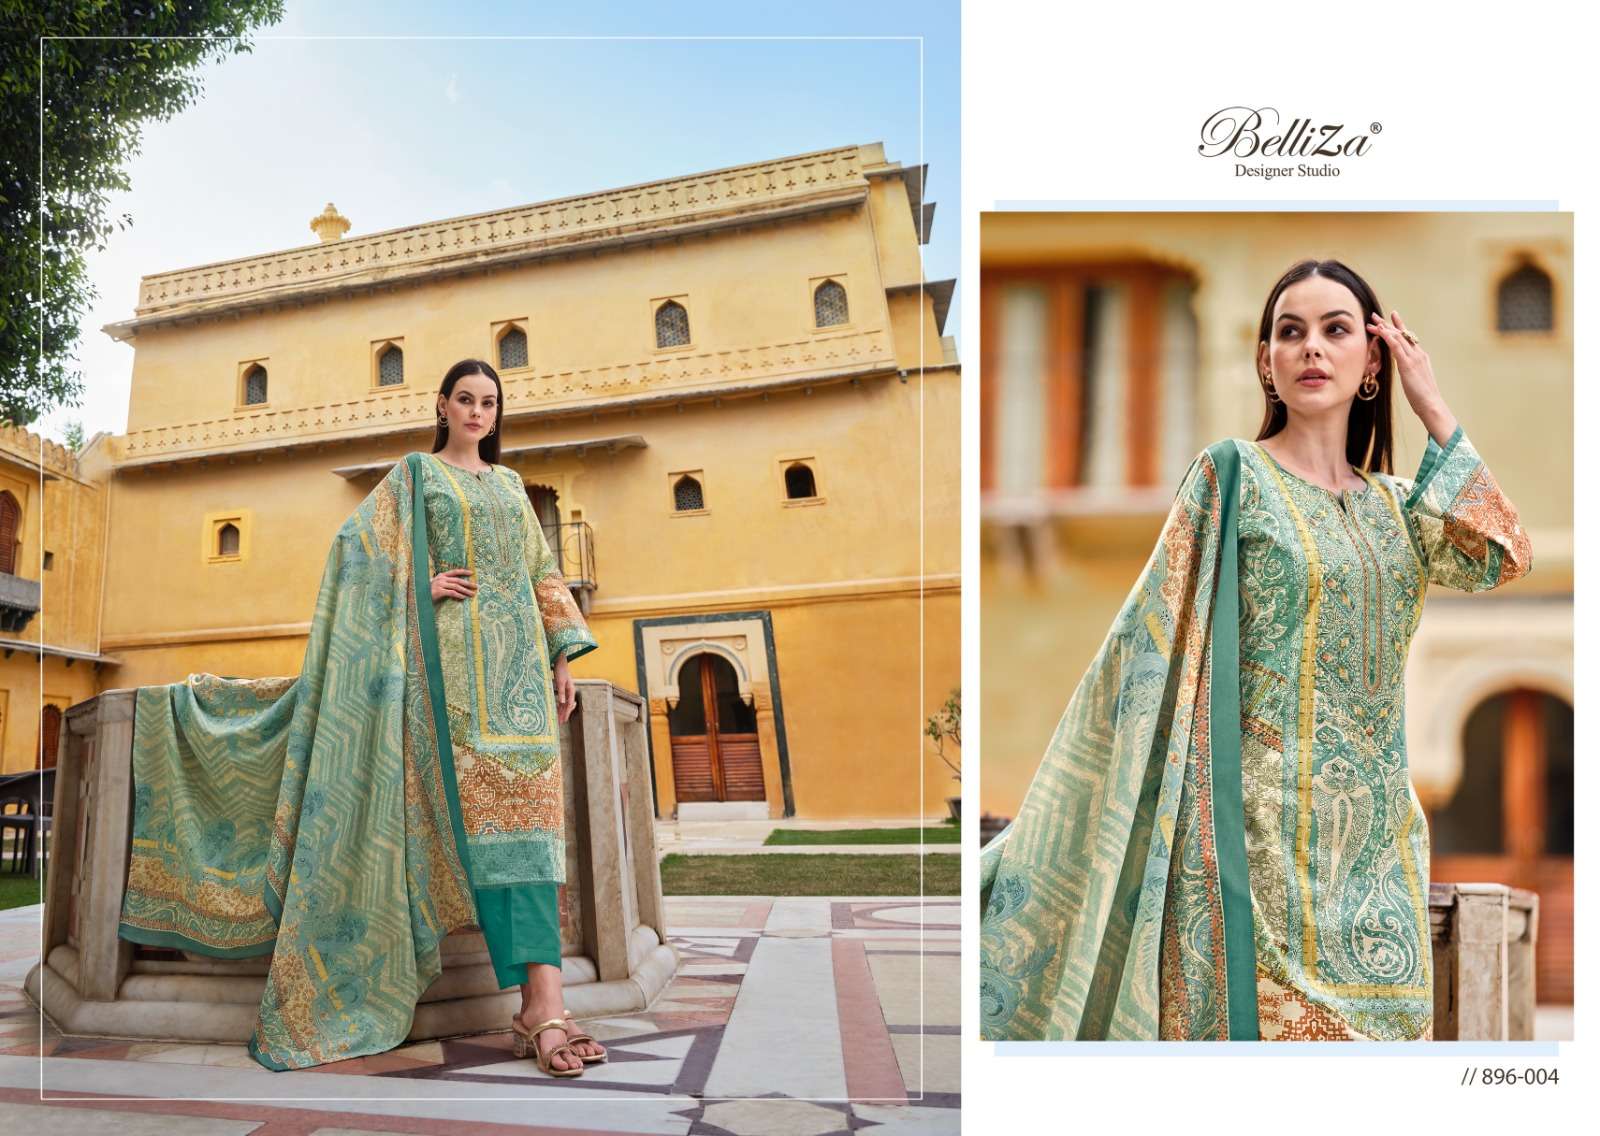 Belliza Naira Vol 43 Premium Designer Cotton Dress Material Wholesale catalog